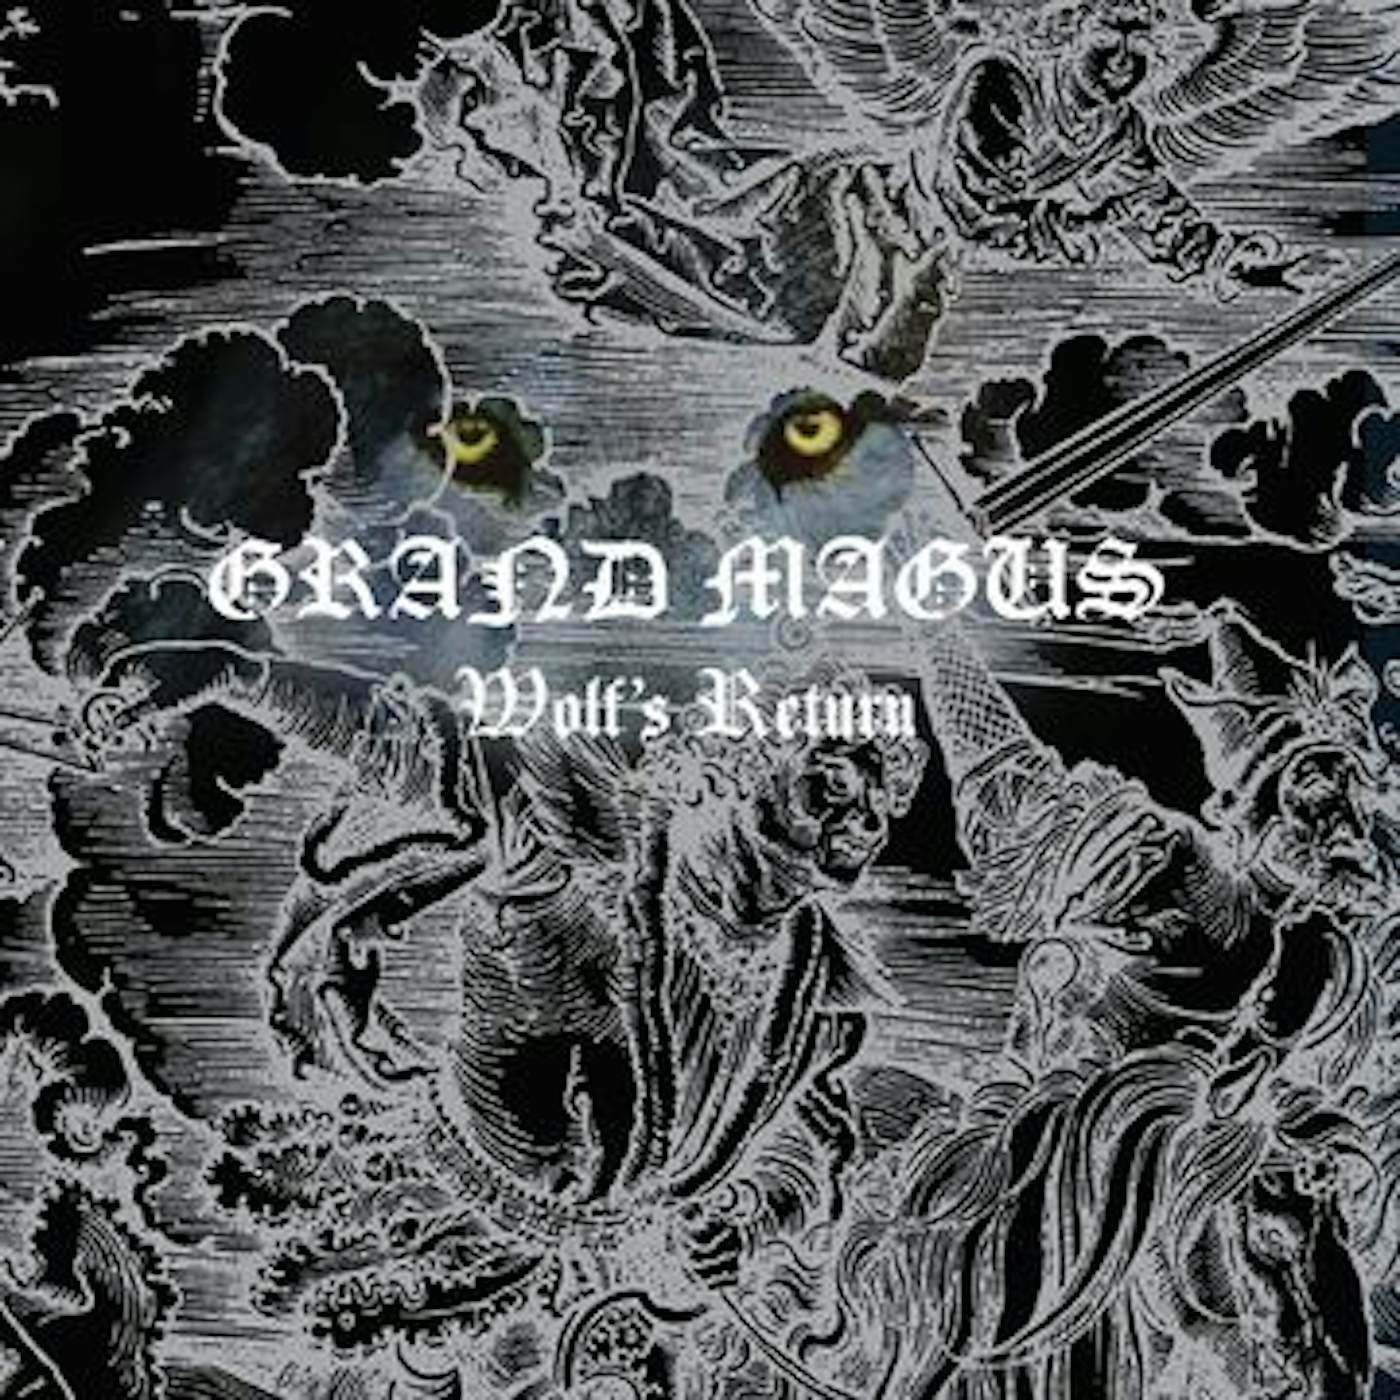 Grand Magus Wolf's return CD